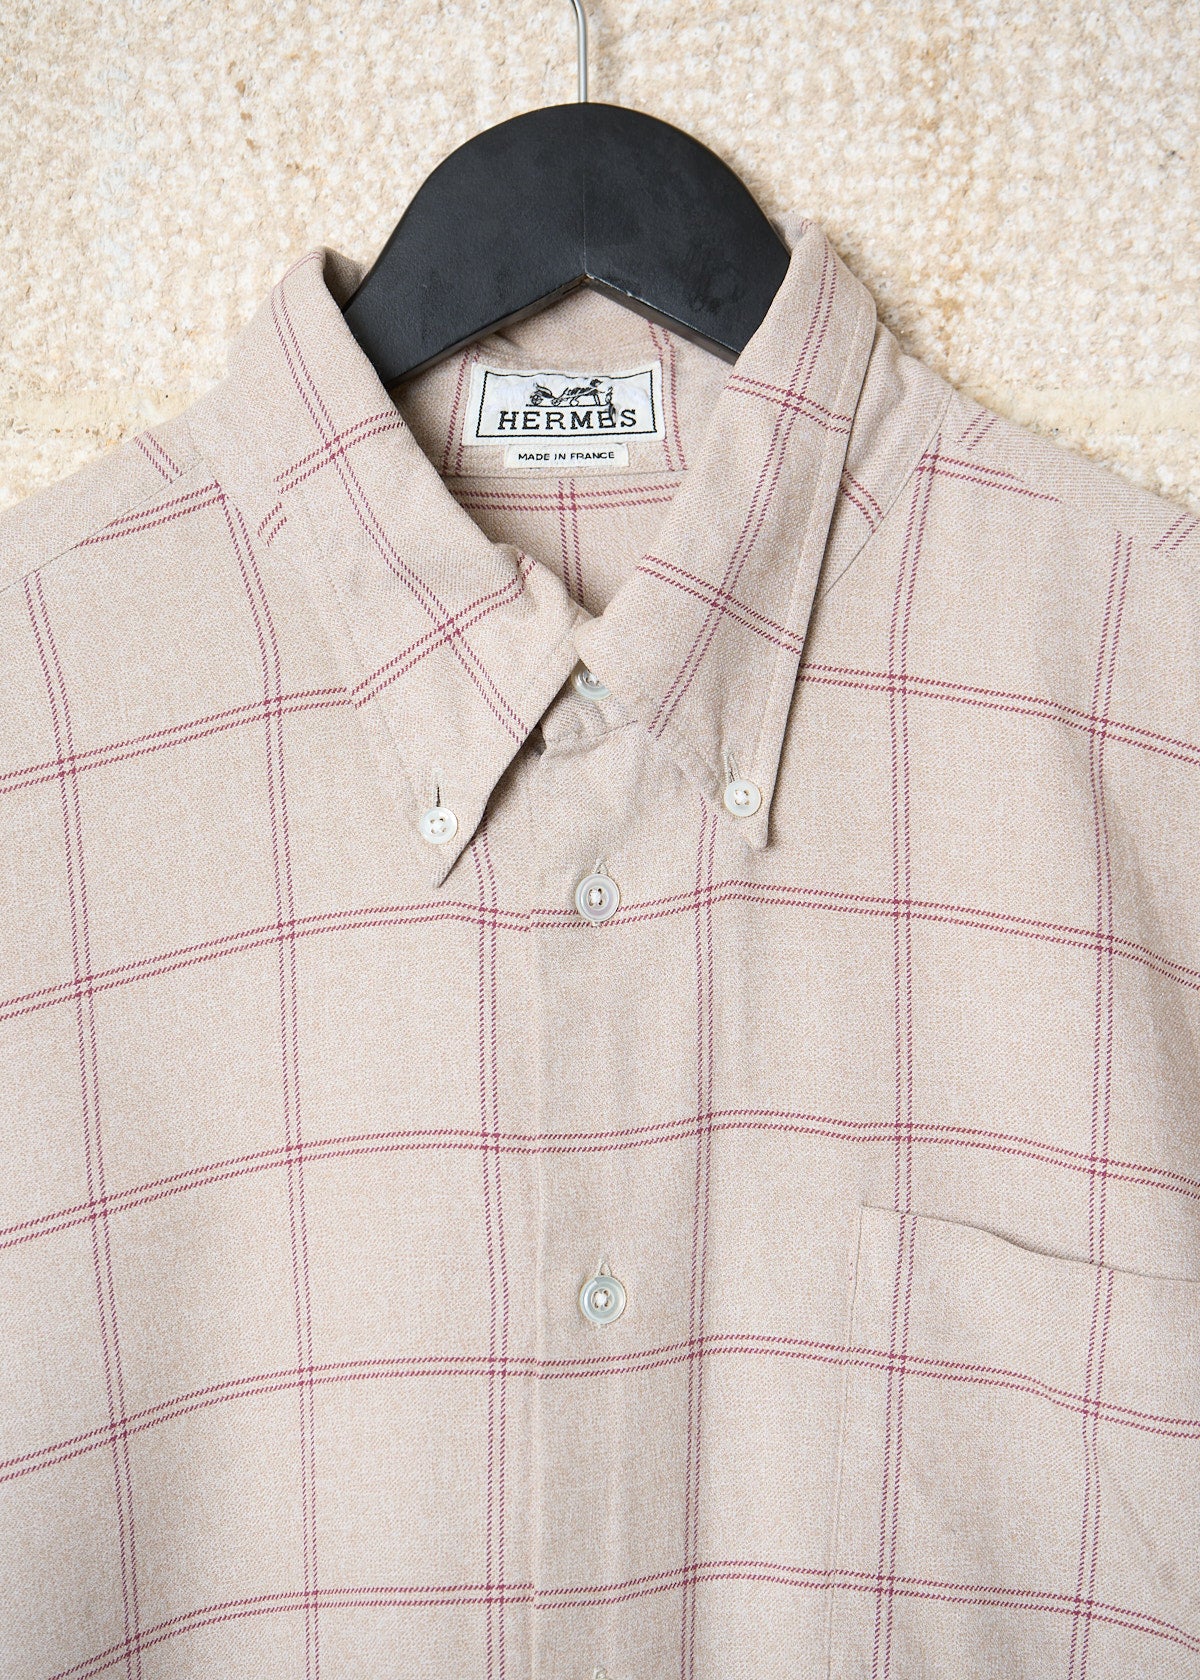 Beige Checkered Cotton Shirt 1990's - X-Large